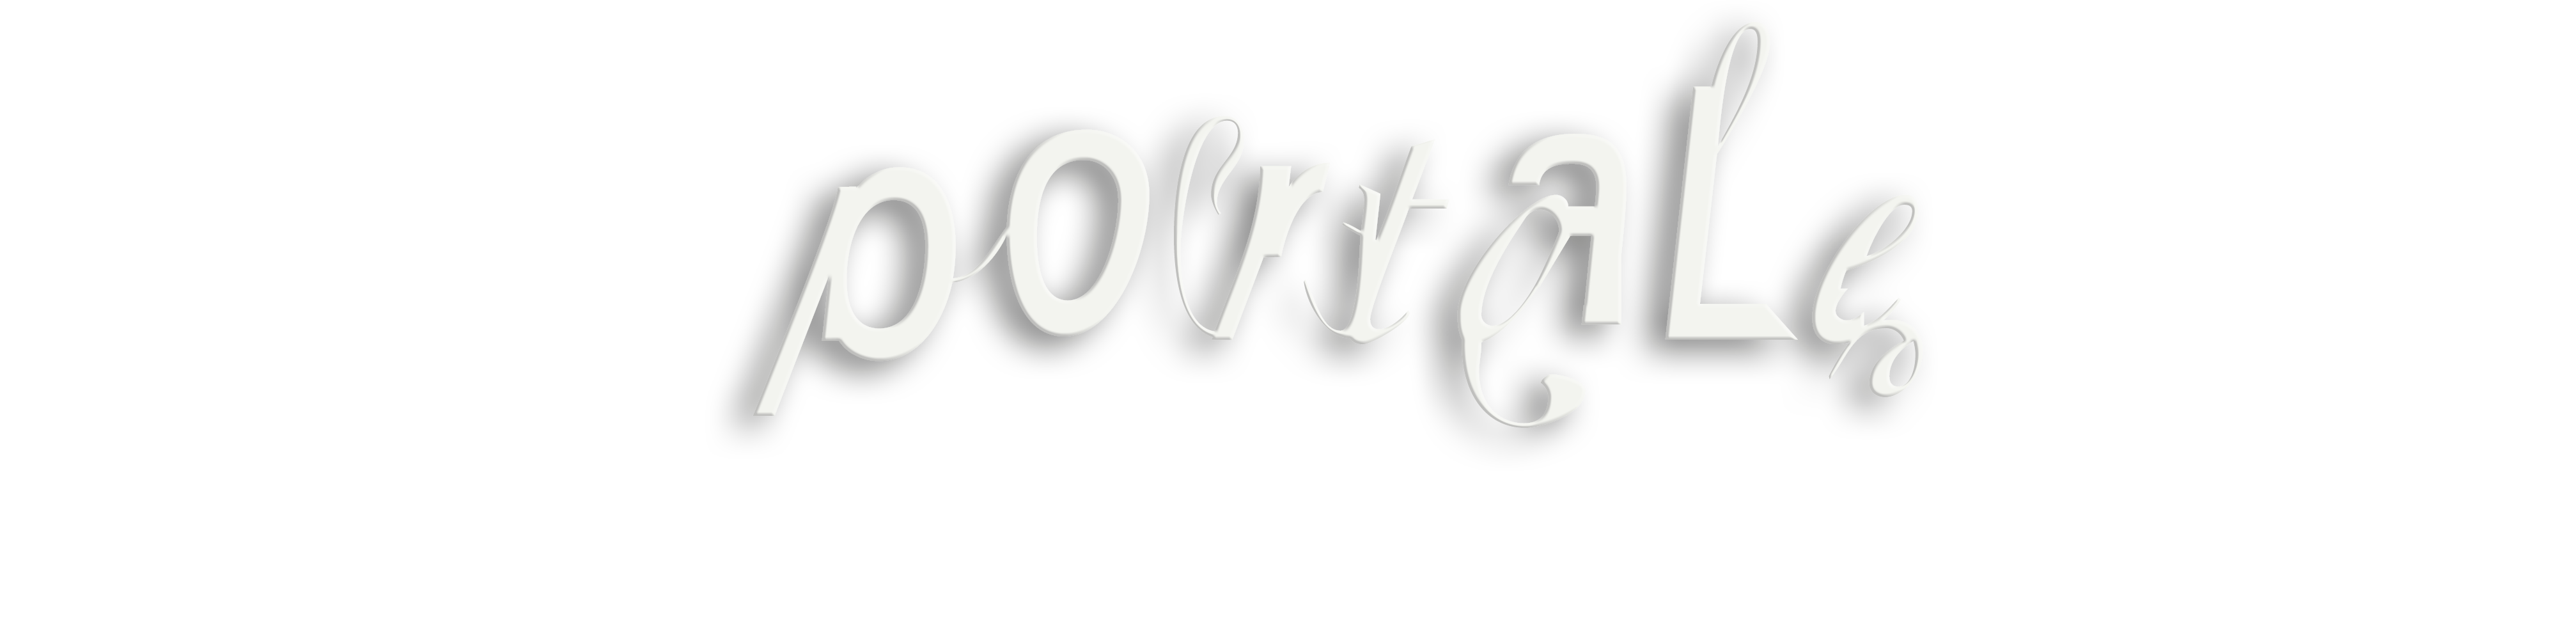 Portale-Logo-nur-Schrift-1.png